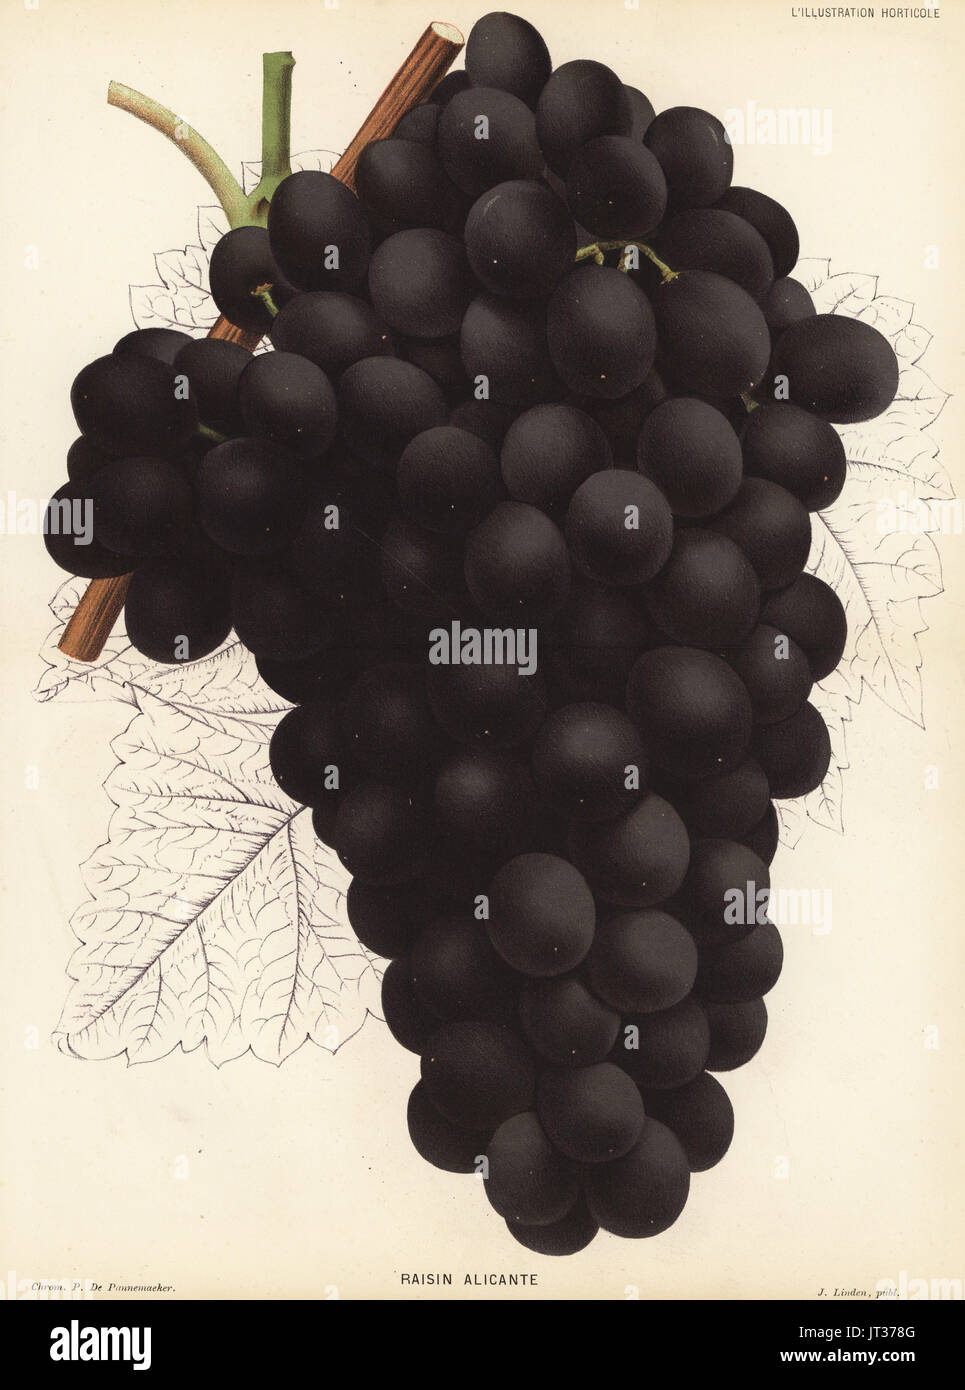 Alicante Bouschet grape variety, Vitis vinifera. Chromolithograph by P. de Pannemaeker from Jean Linden's l'Illustration Horticole, Brussels, 1882. Stock Photo